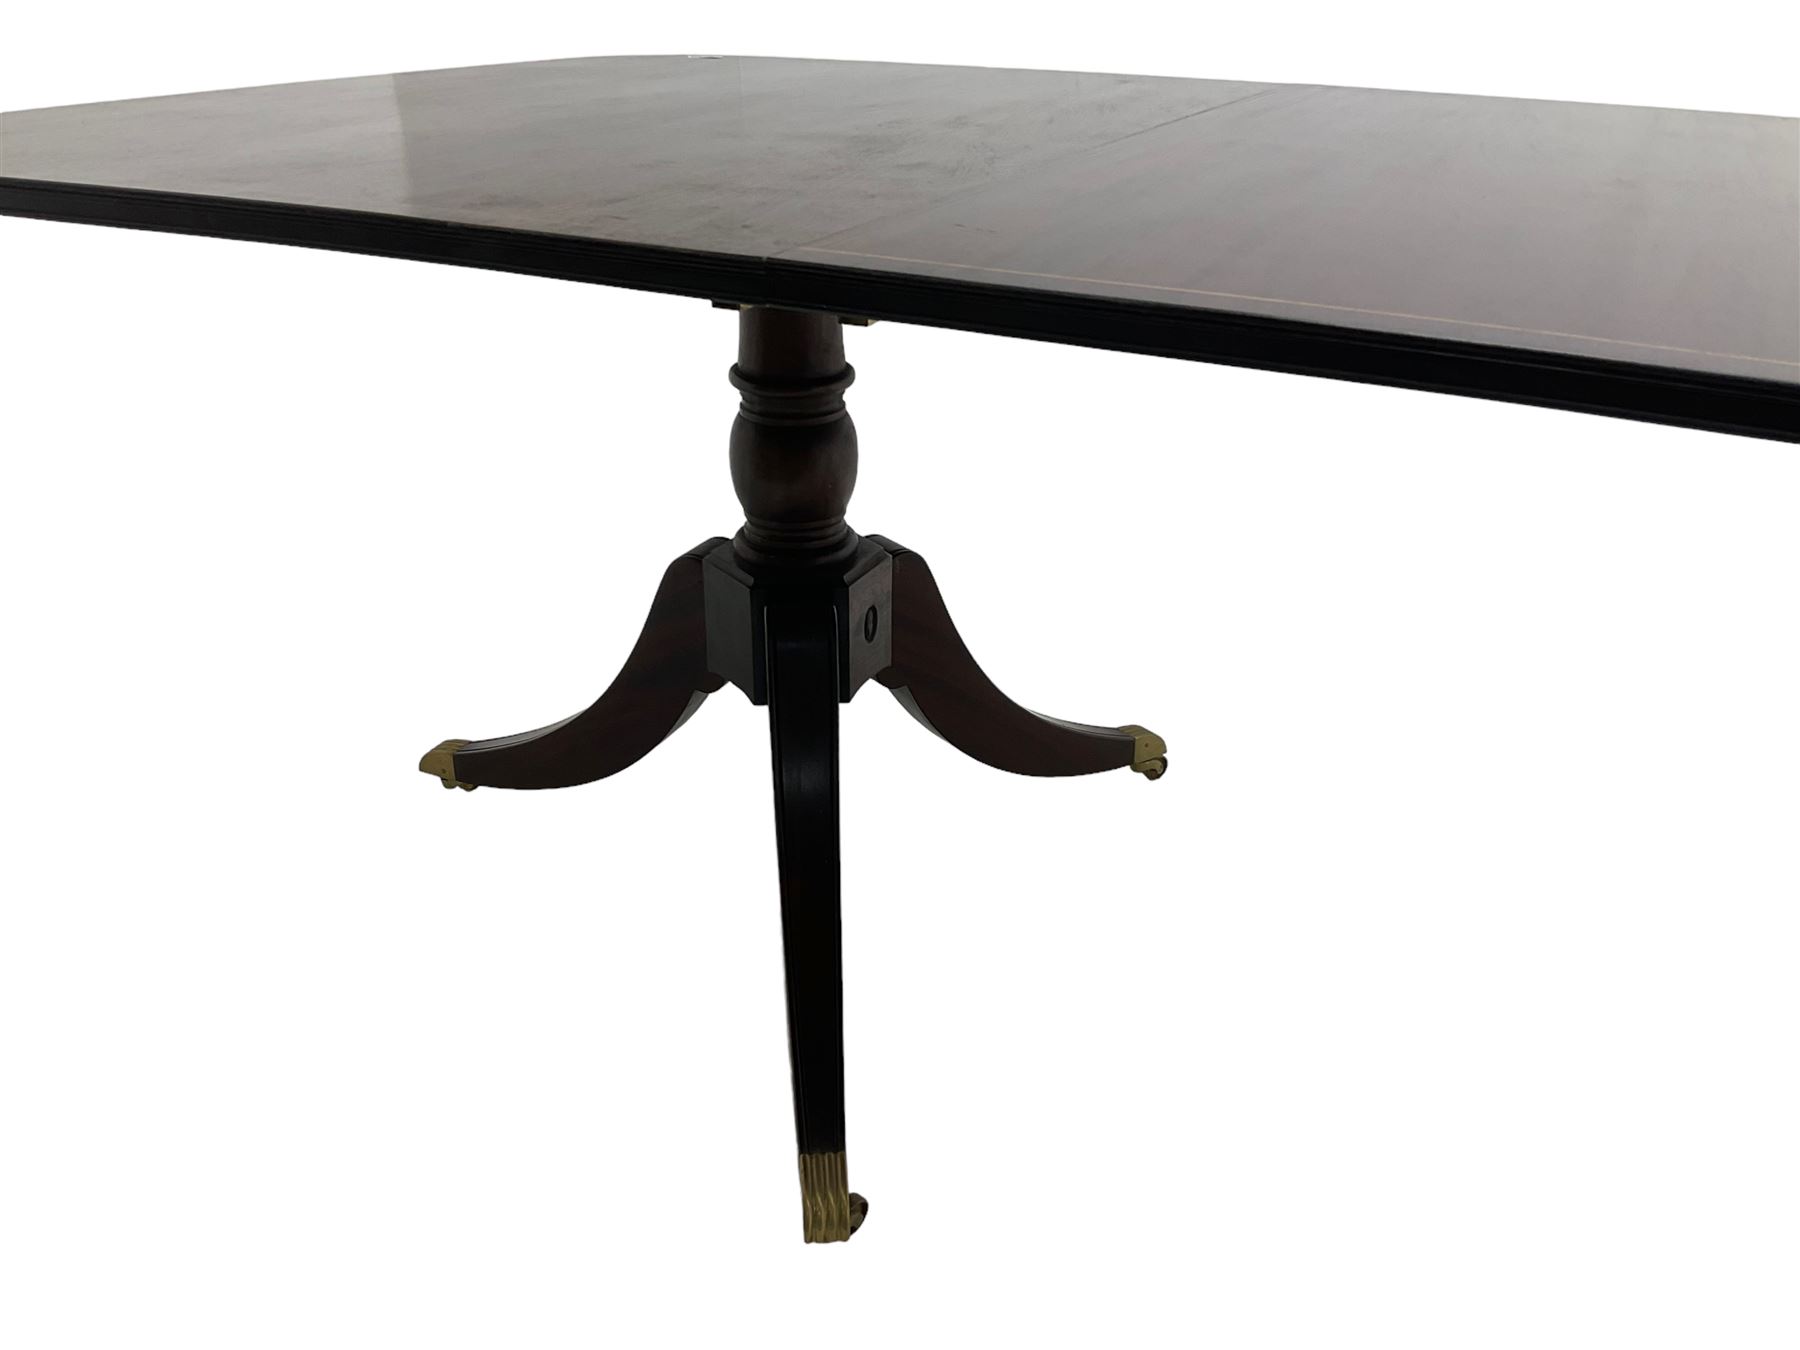 Acorn Industries - Regency design extending twin pillar dining table - Image 5 of 9